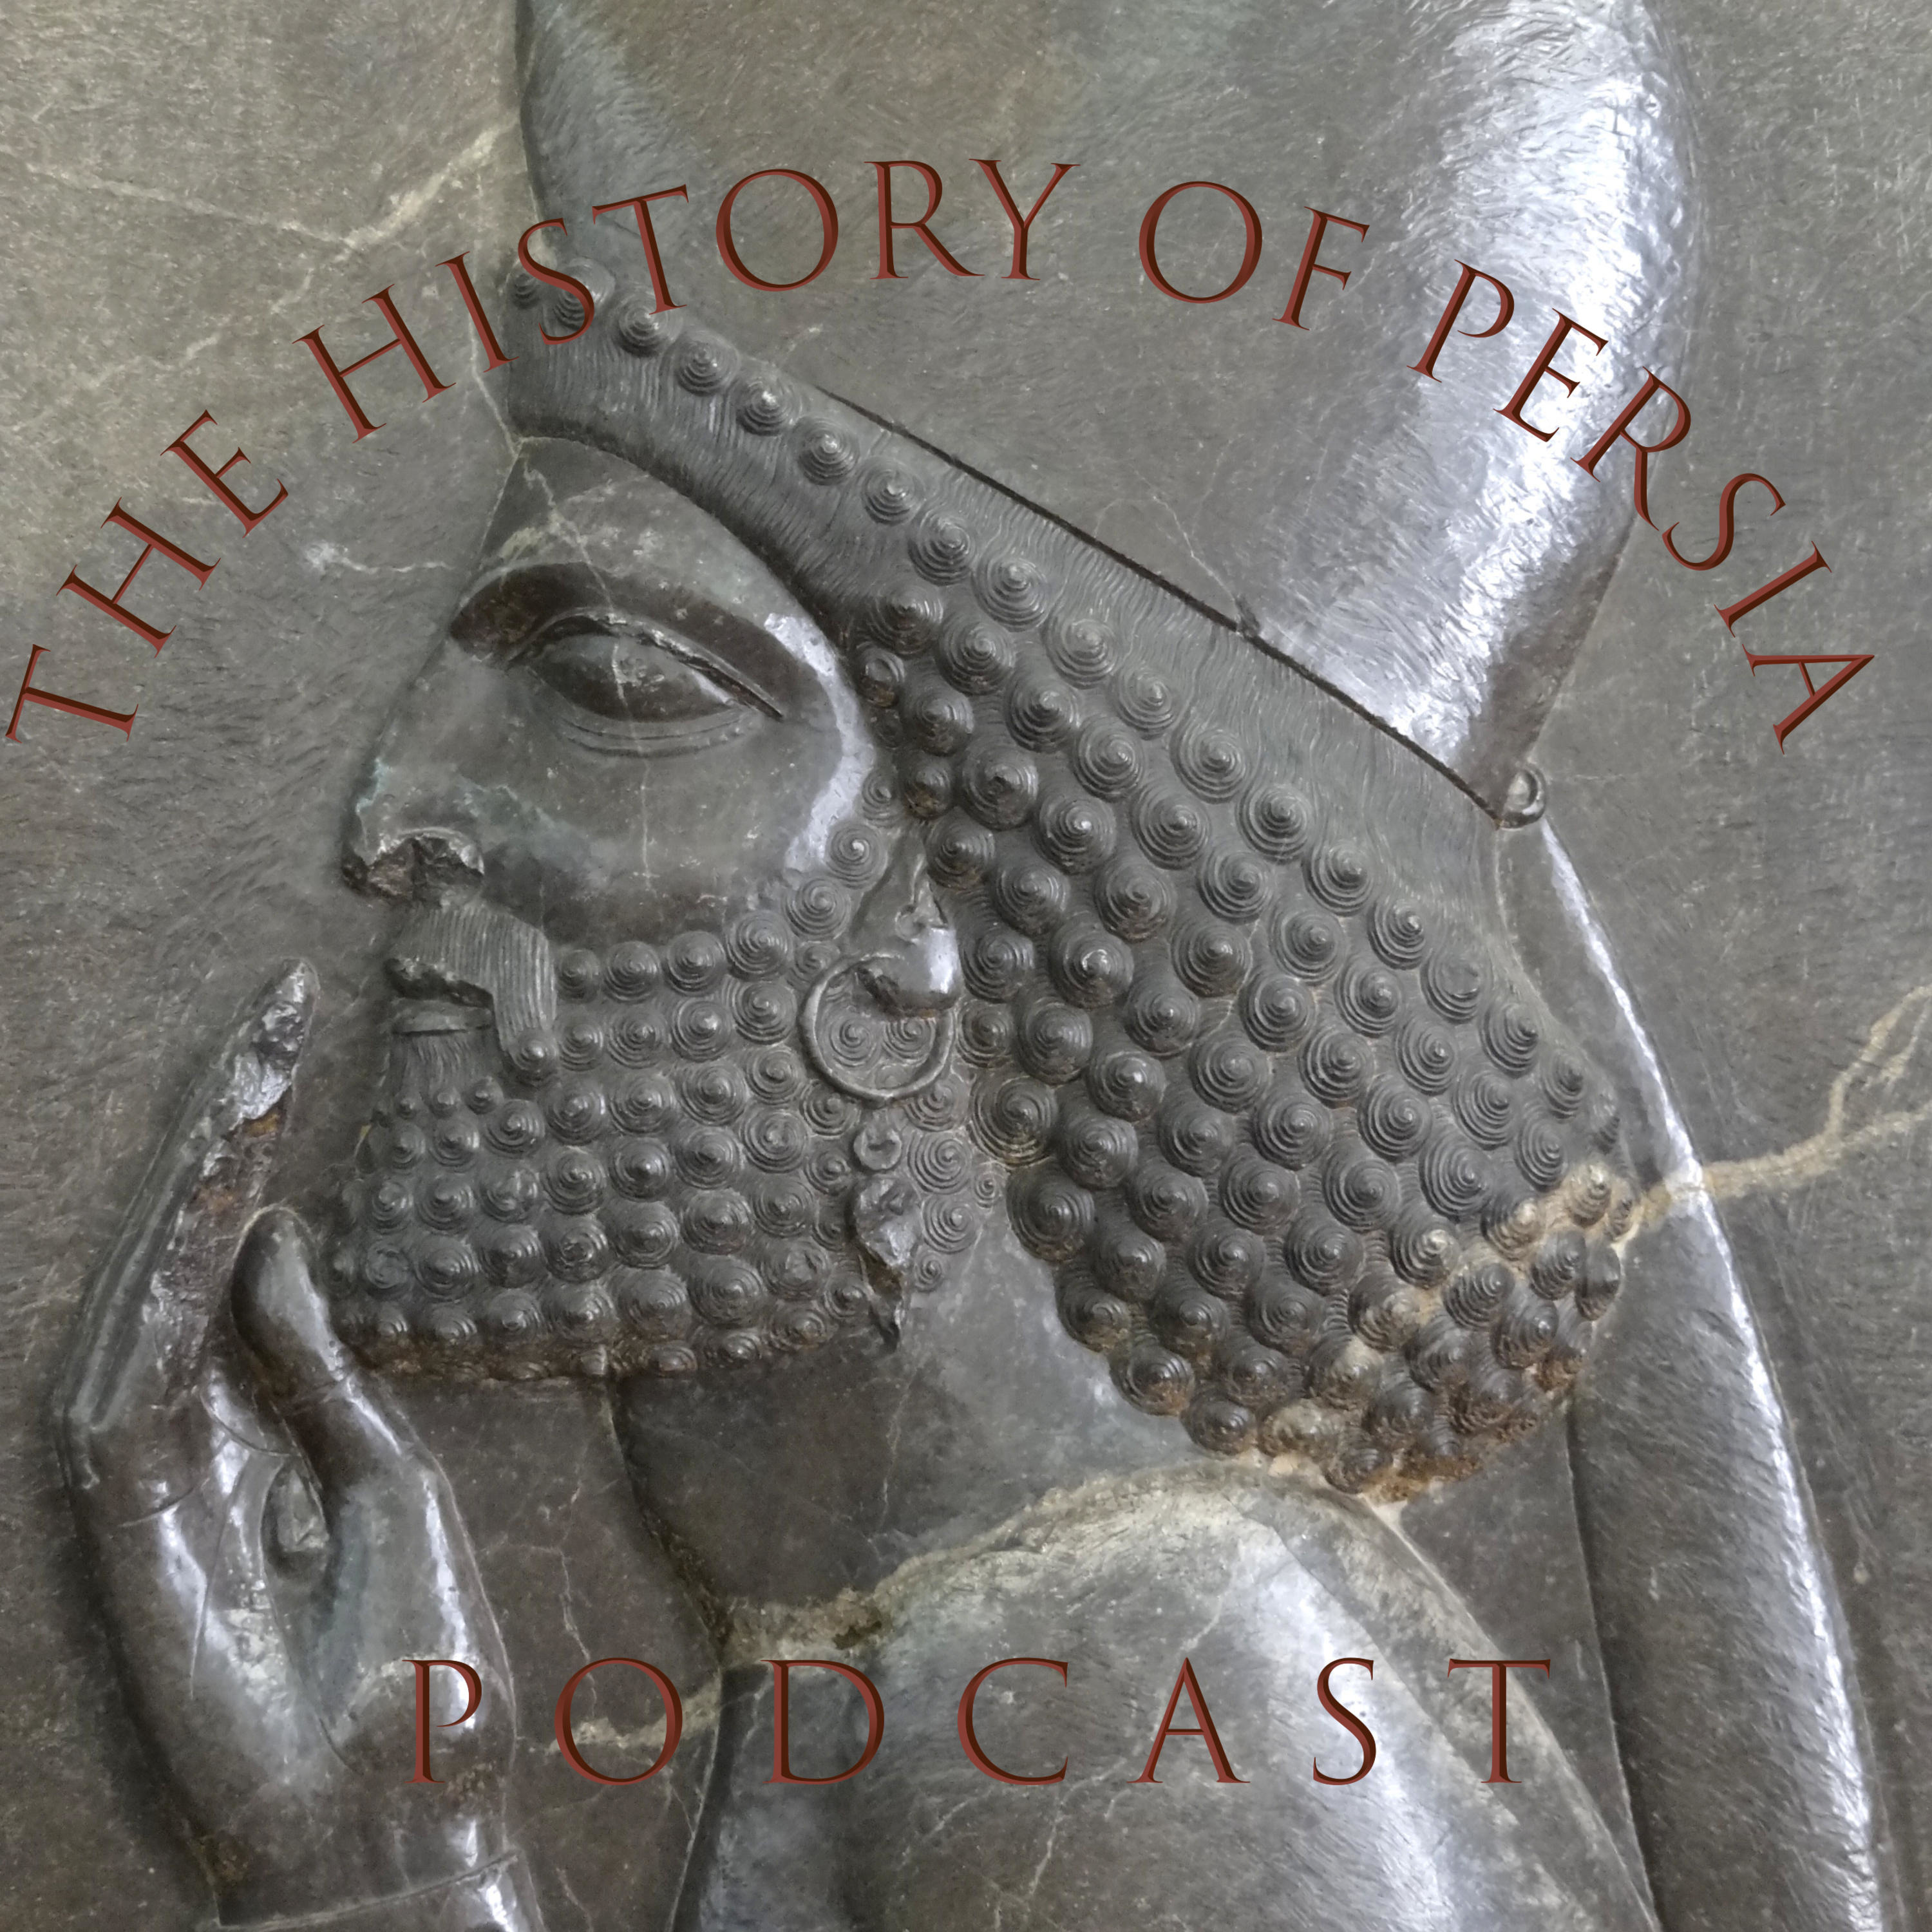 33: Revenge of the Persians